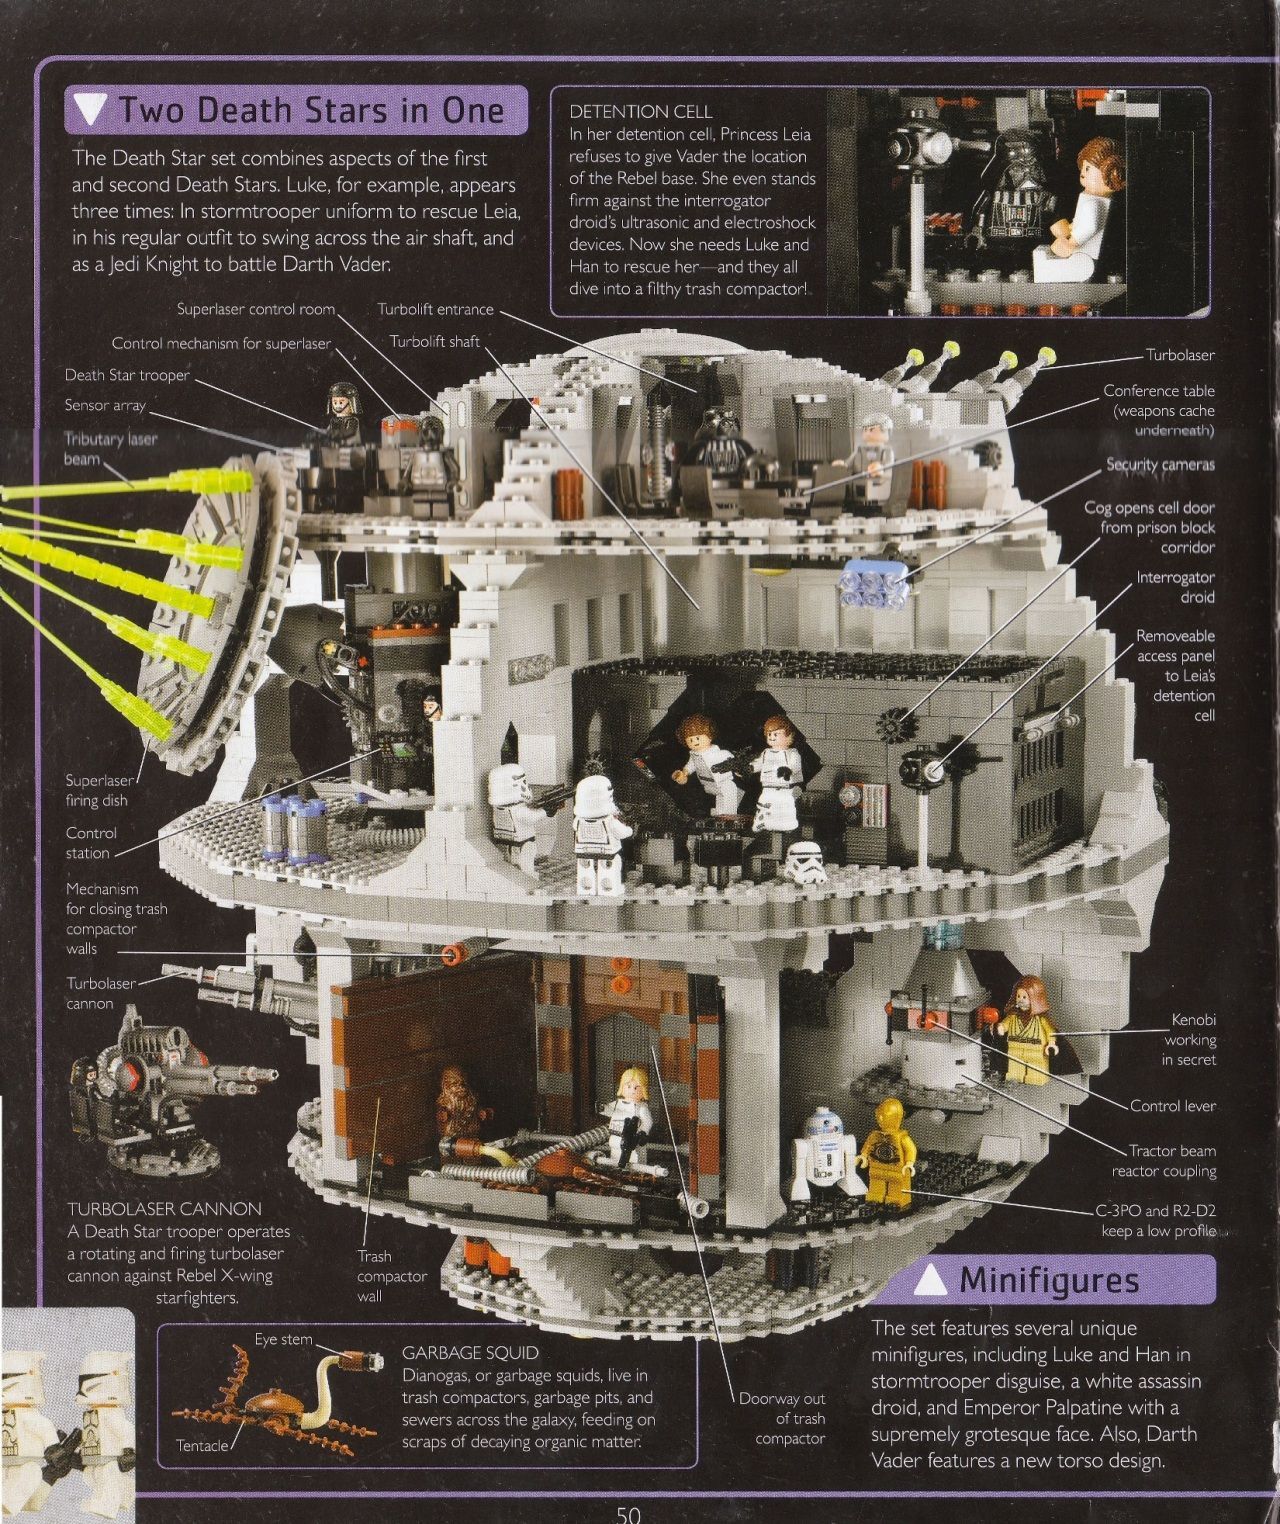 Lego Star Wars The Visual Dictionary 2009 Lego Star Wars The Visual Dictionary 2009 51